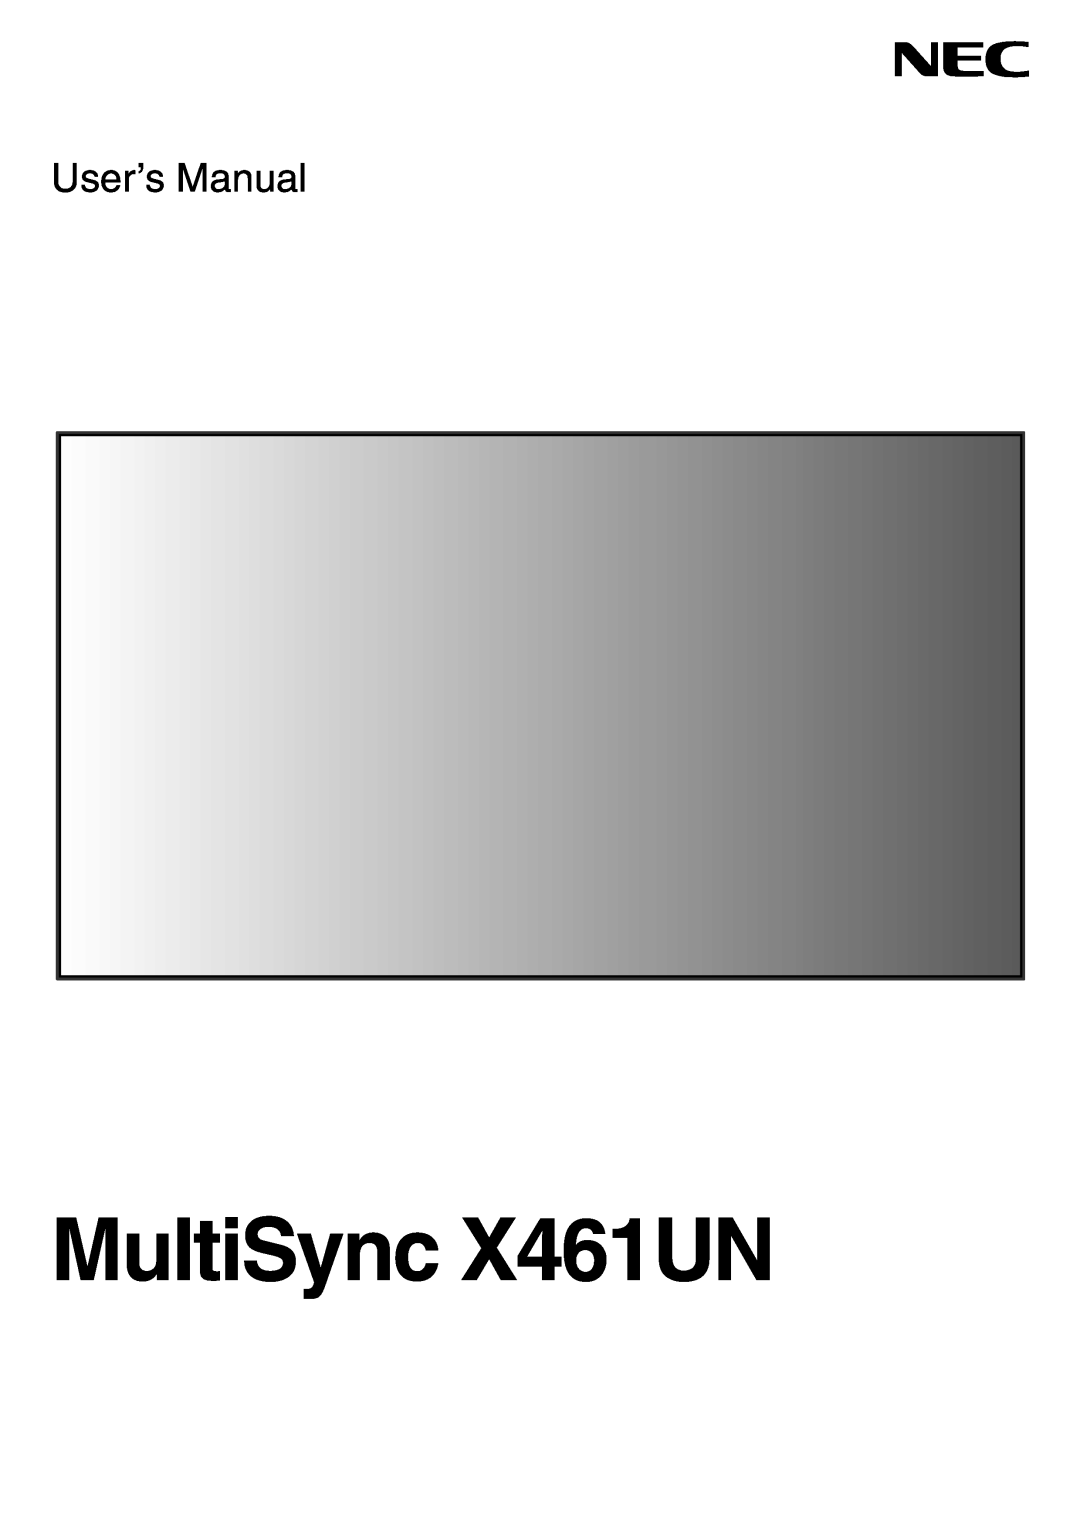 NEC user manual MultiSync X461UN, UserÕs Manual 